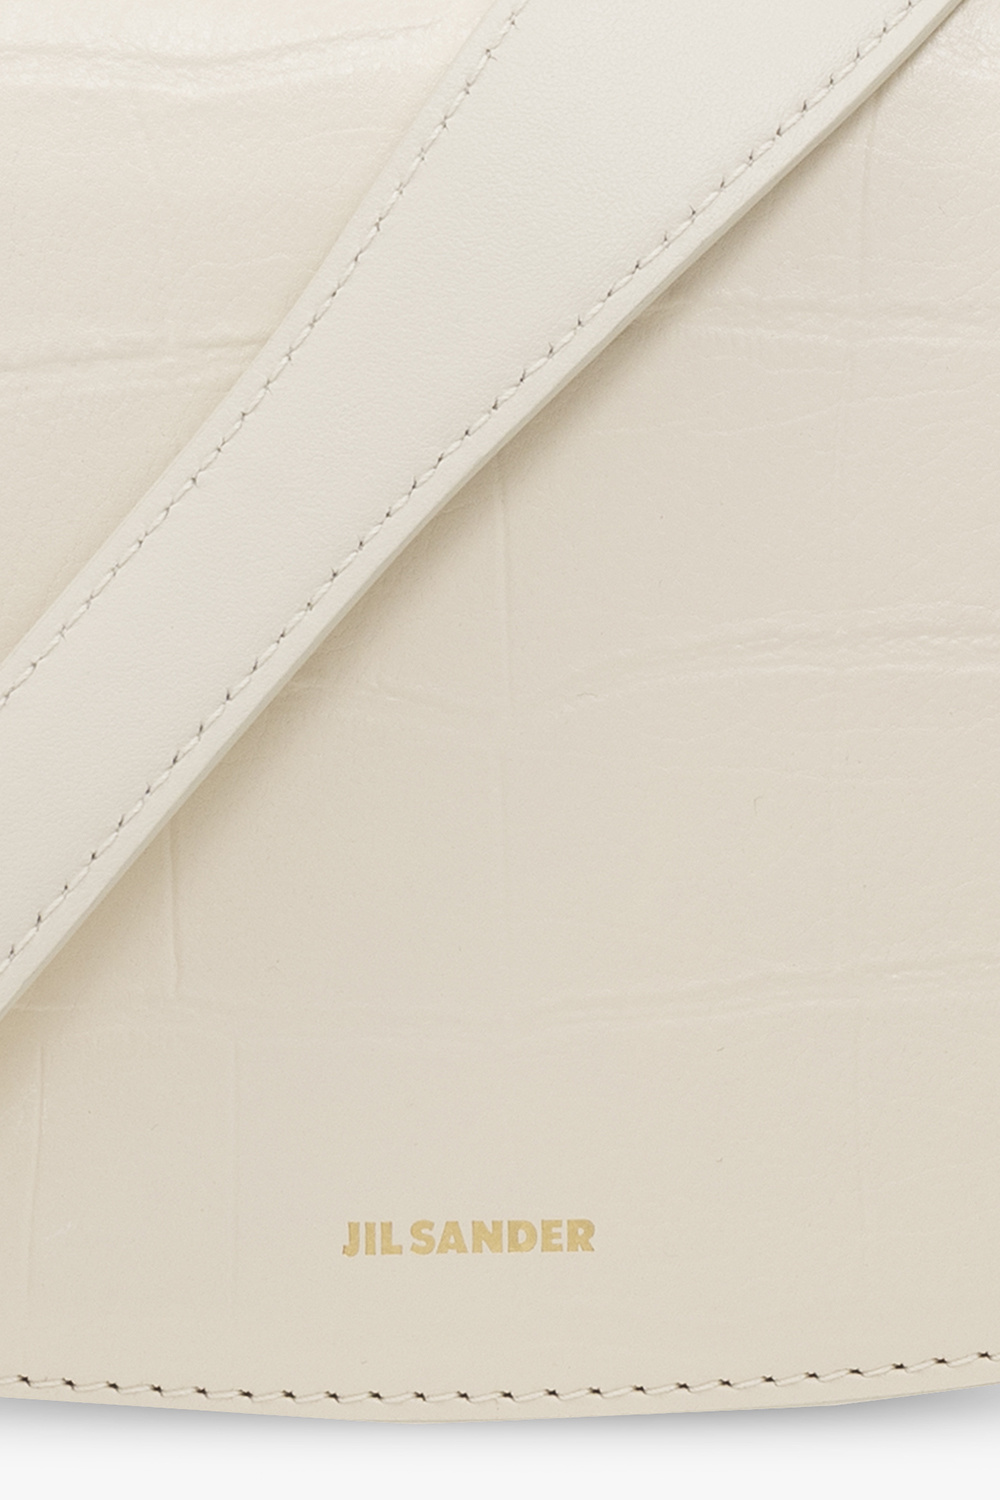 JIL SANDER Jil Sander stripe-print shirt dress